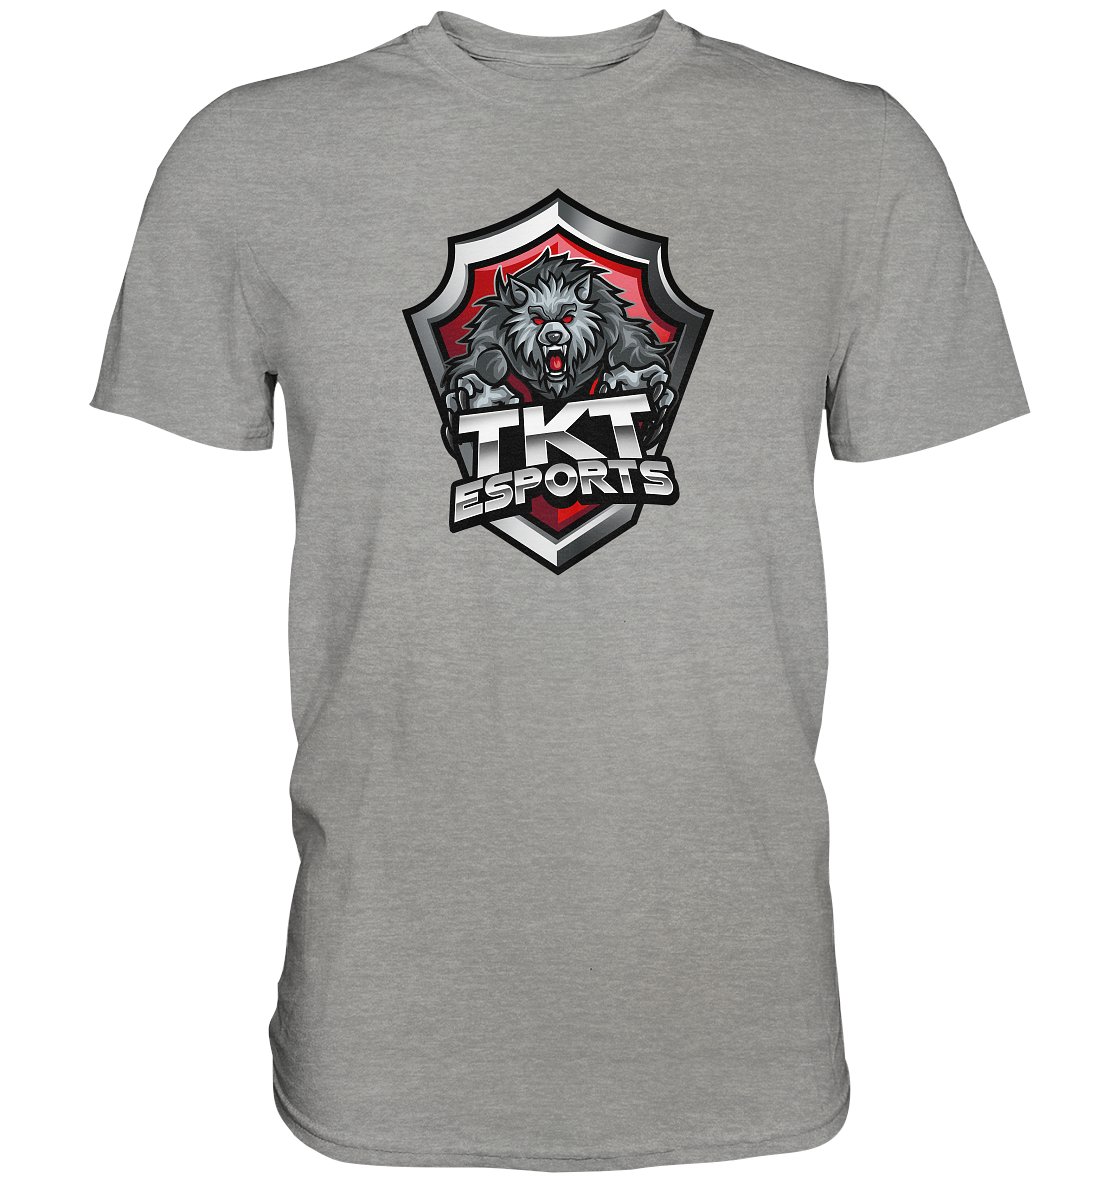 TKT ESPORTS - Basic Shirt